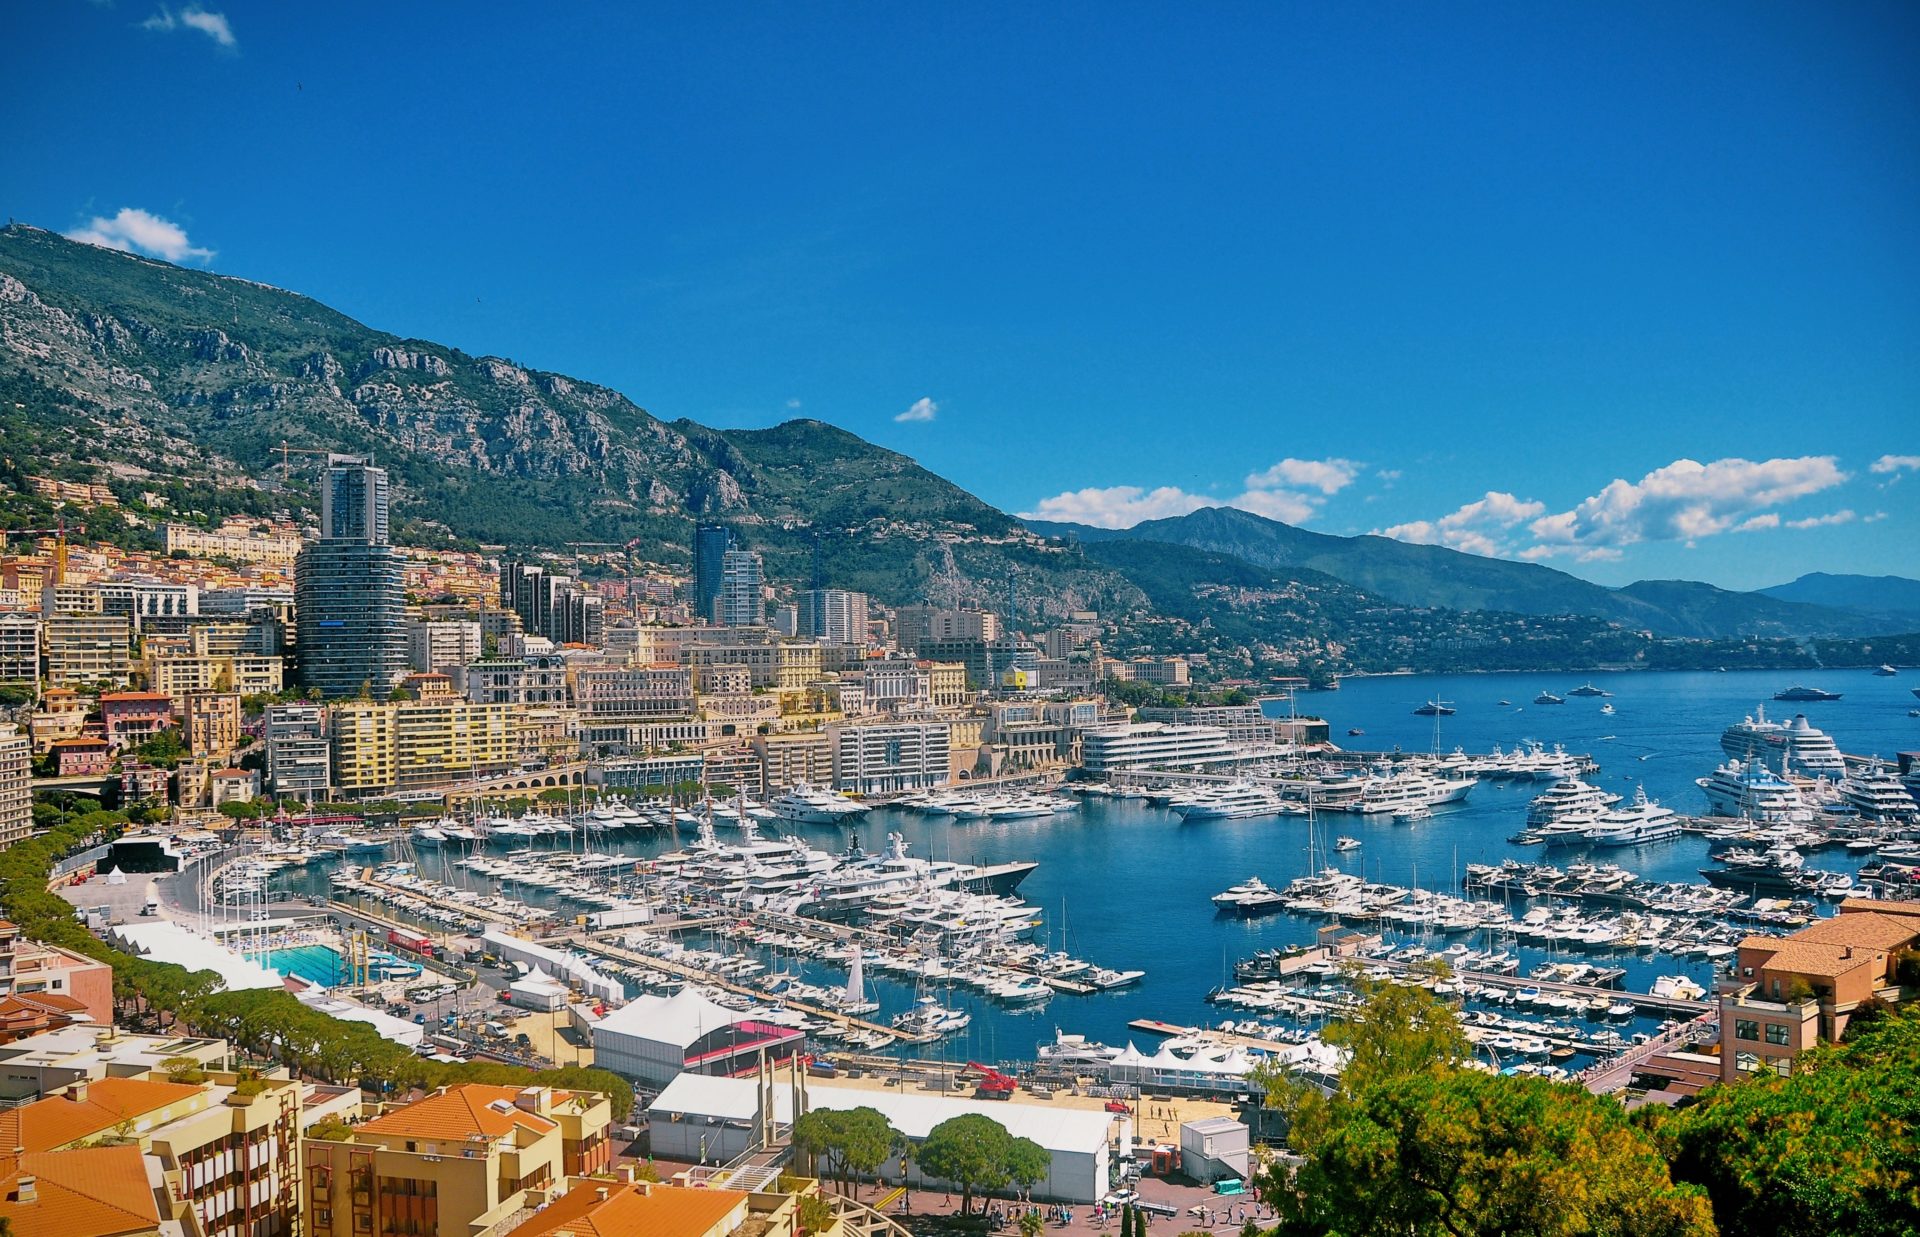 Monaco, Monte-Carlo, Eze, and Nice